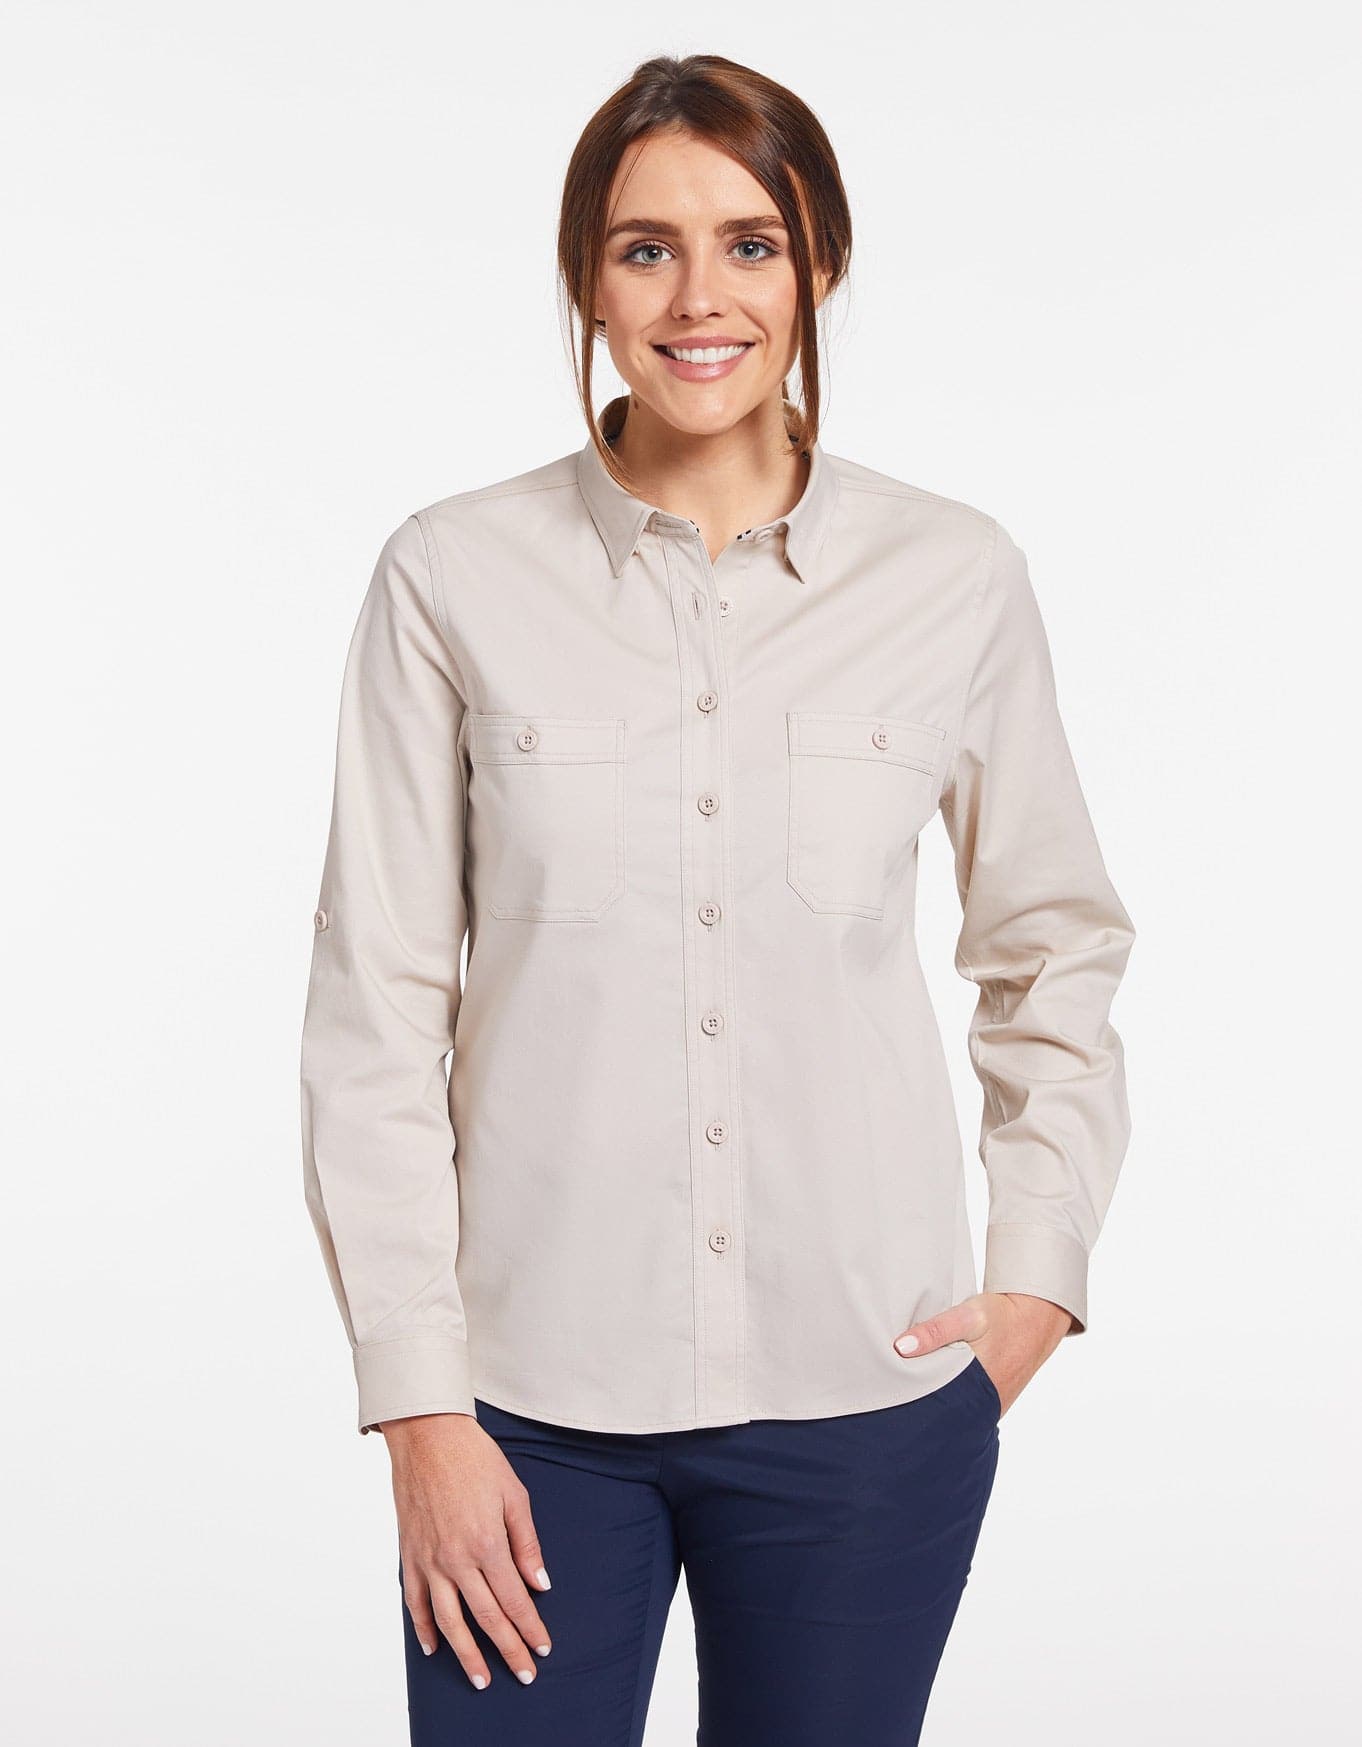 Outback Shirt UPF50+ Technicool for Sun Protection For Women - Solbari USA